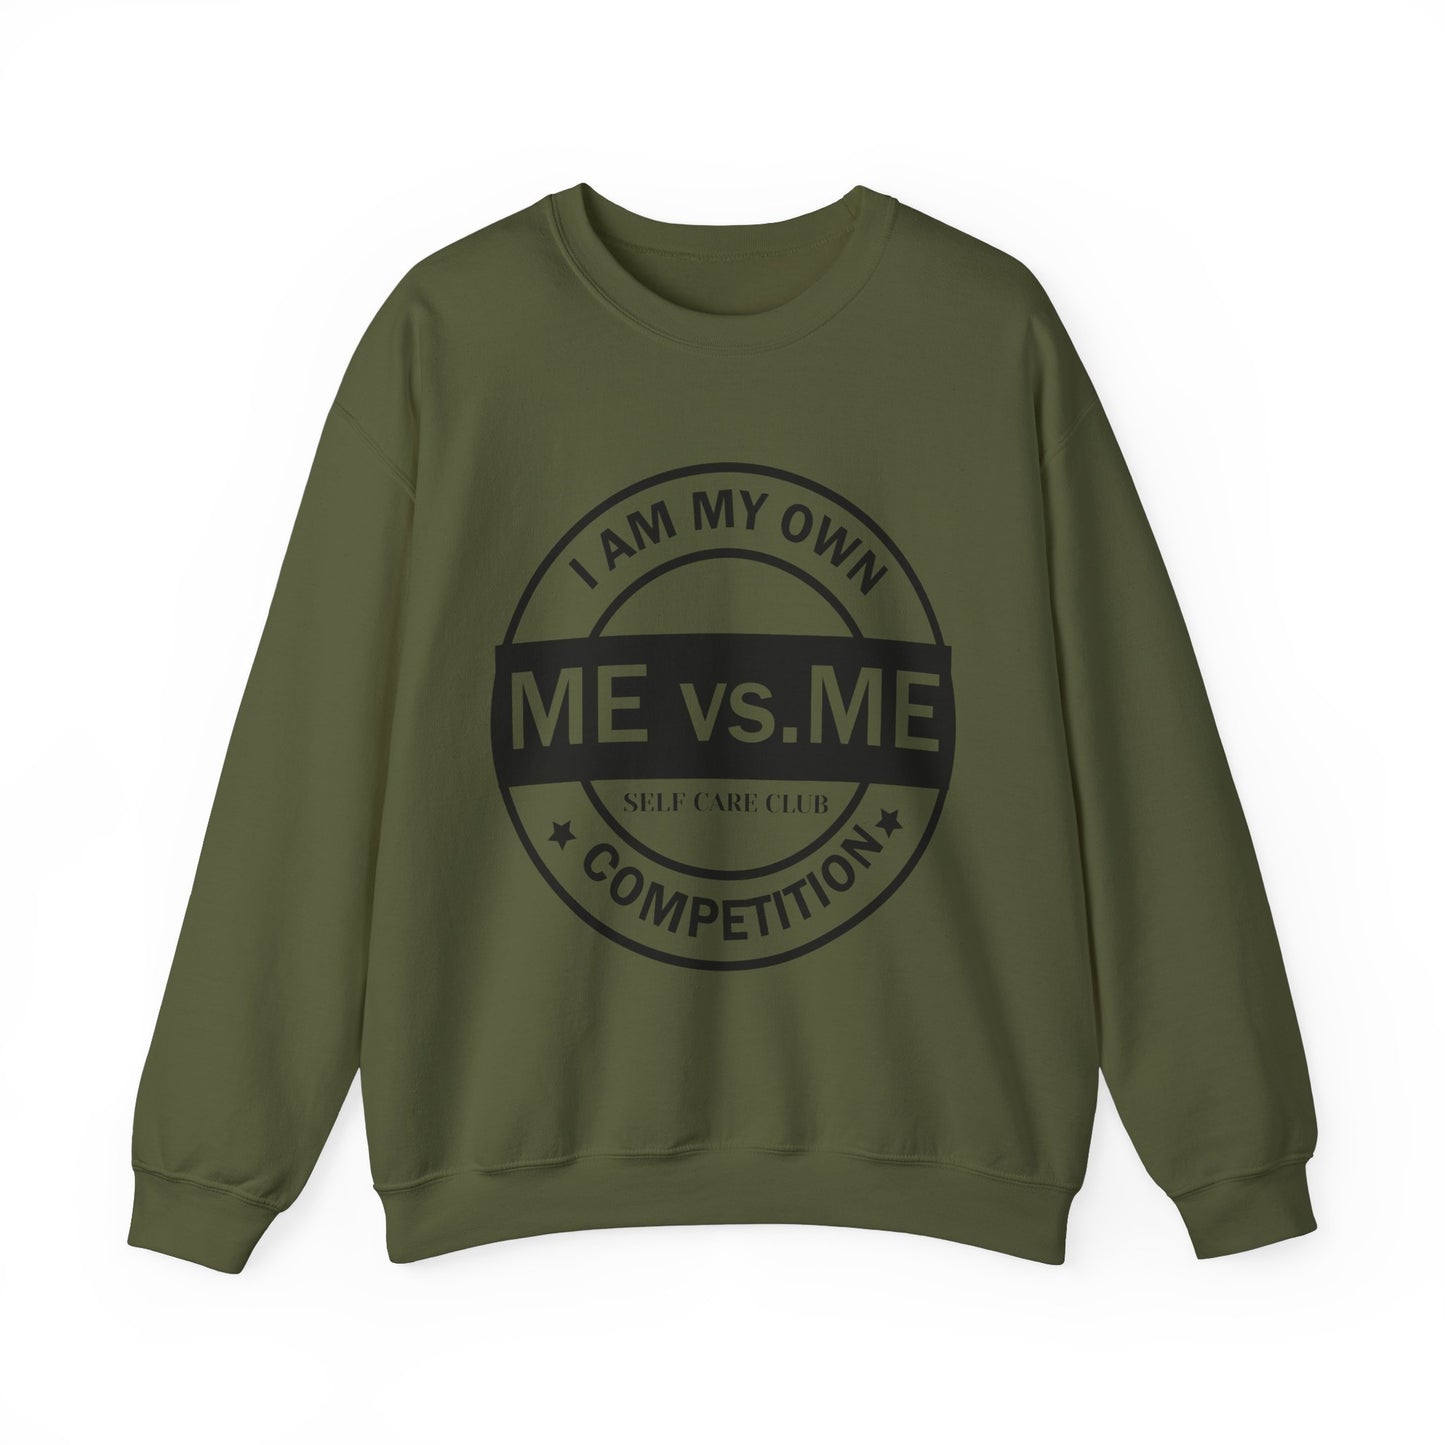 ME vs. ME Sweatshirt